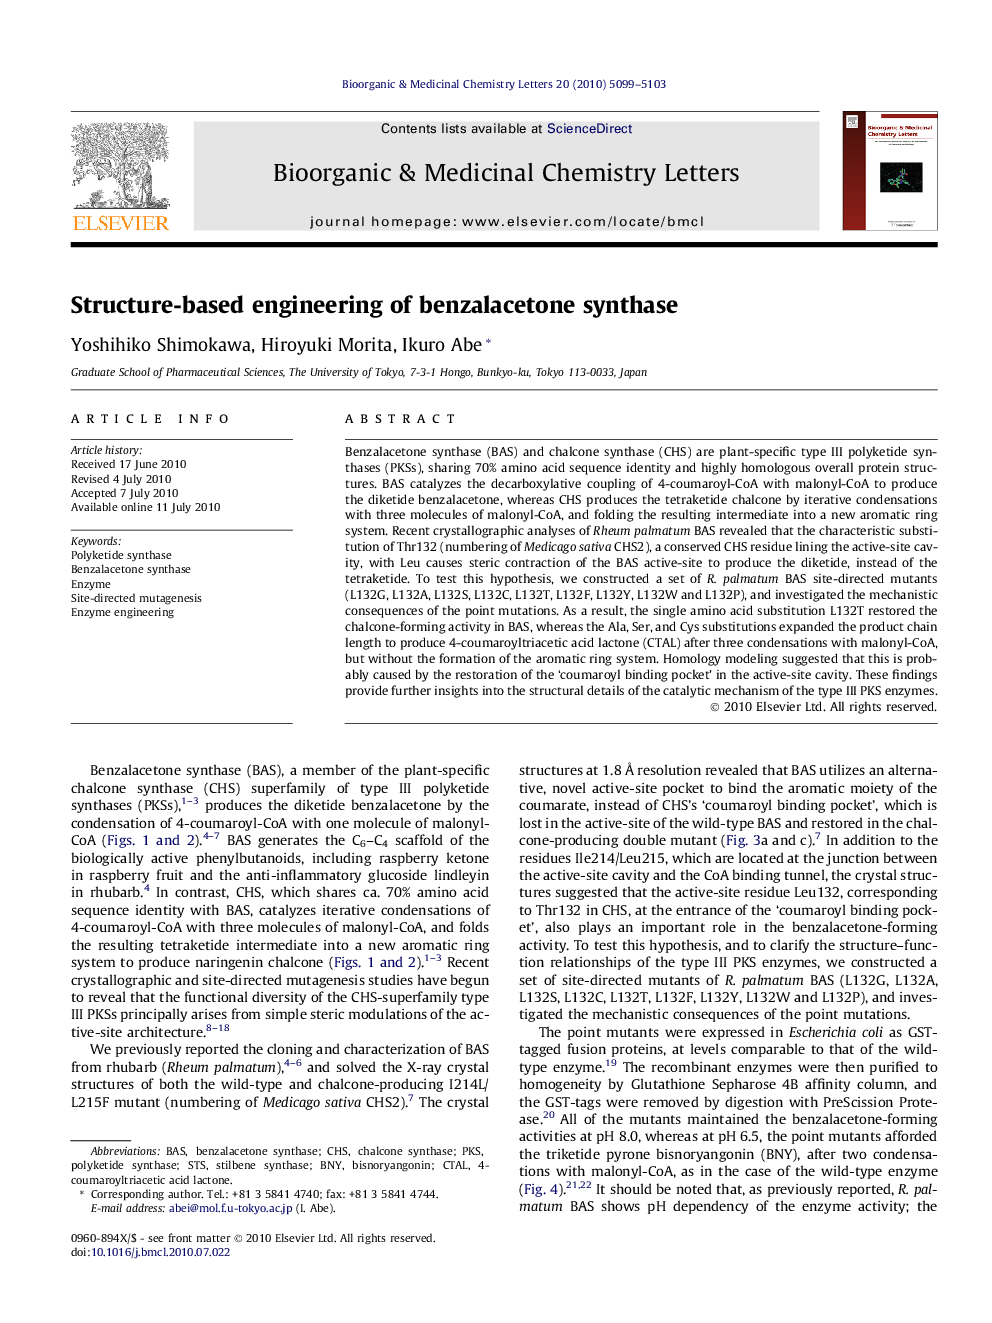 Structure-based engineering of benzalacetone synthase